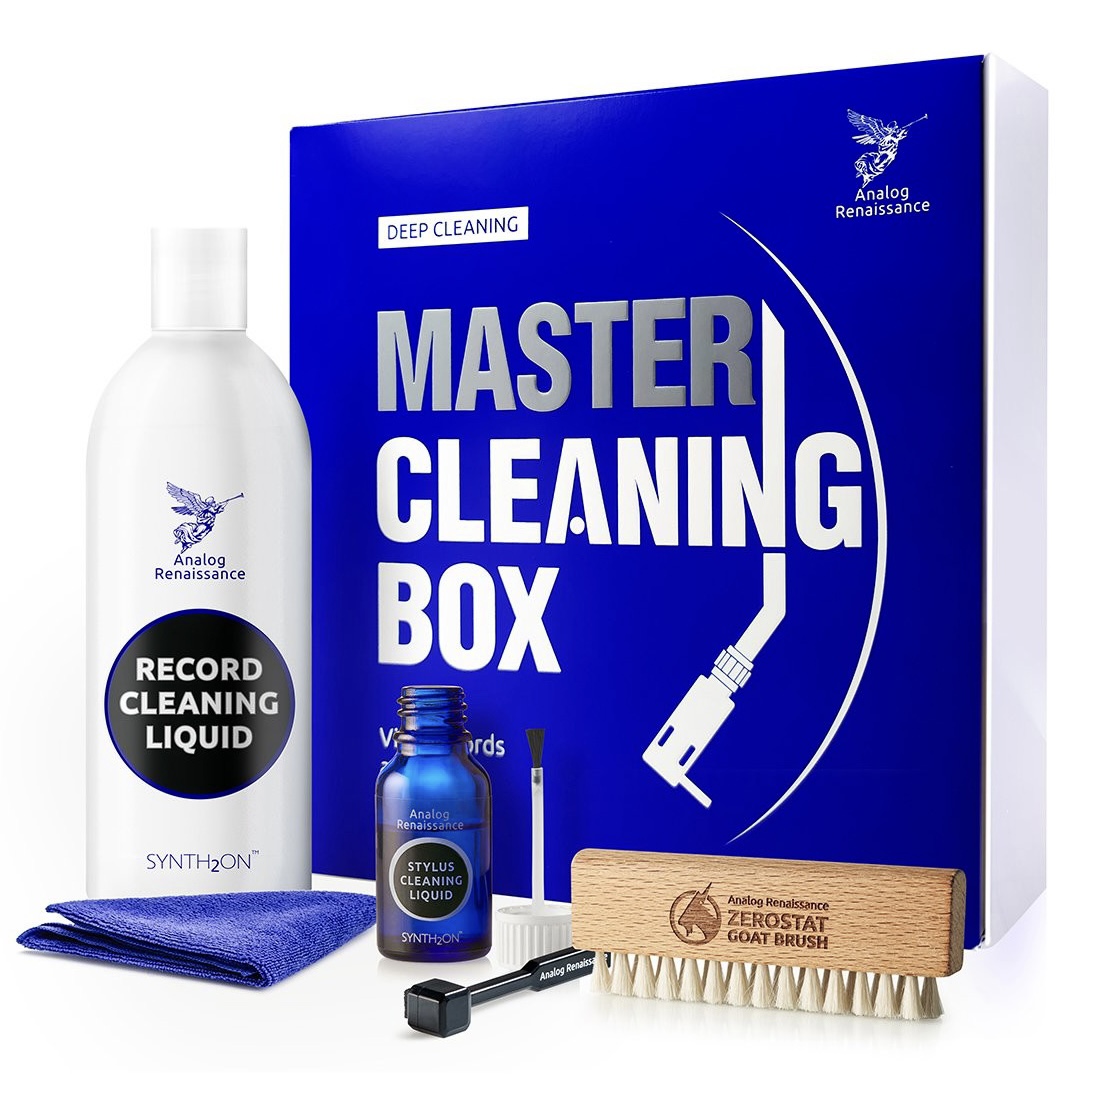 Комплект для ухода за винилом Analog Renaissance Master Cleaning Box